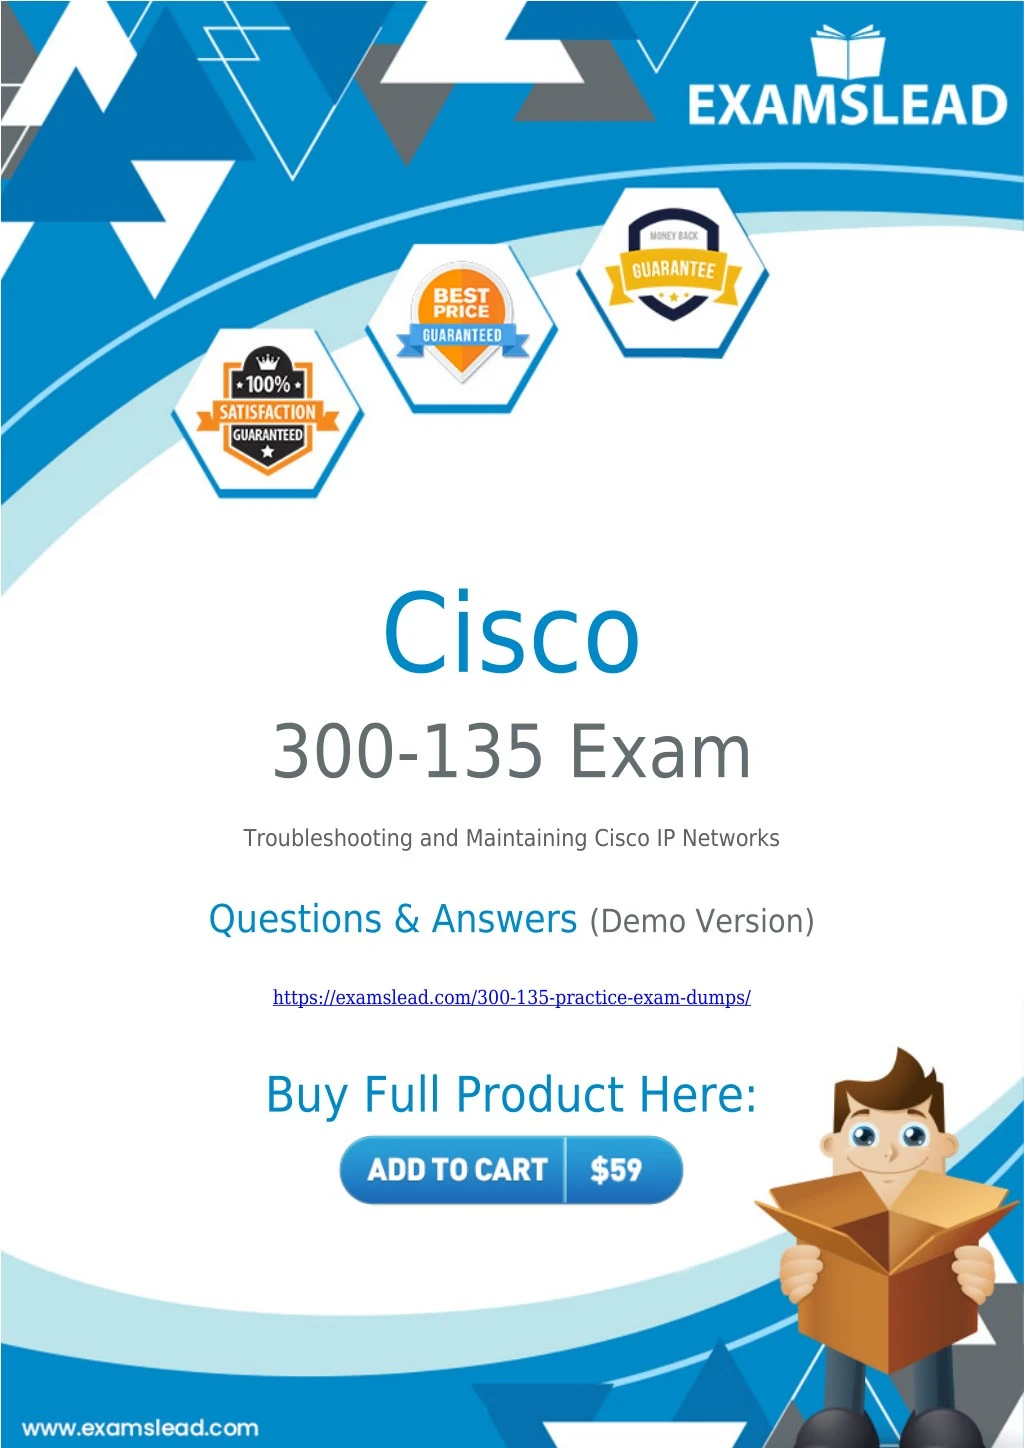 500-443 Online Tests